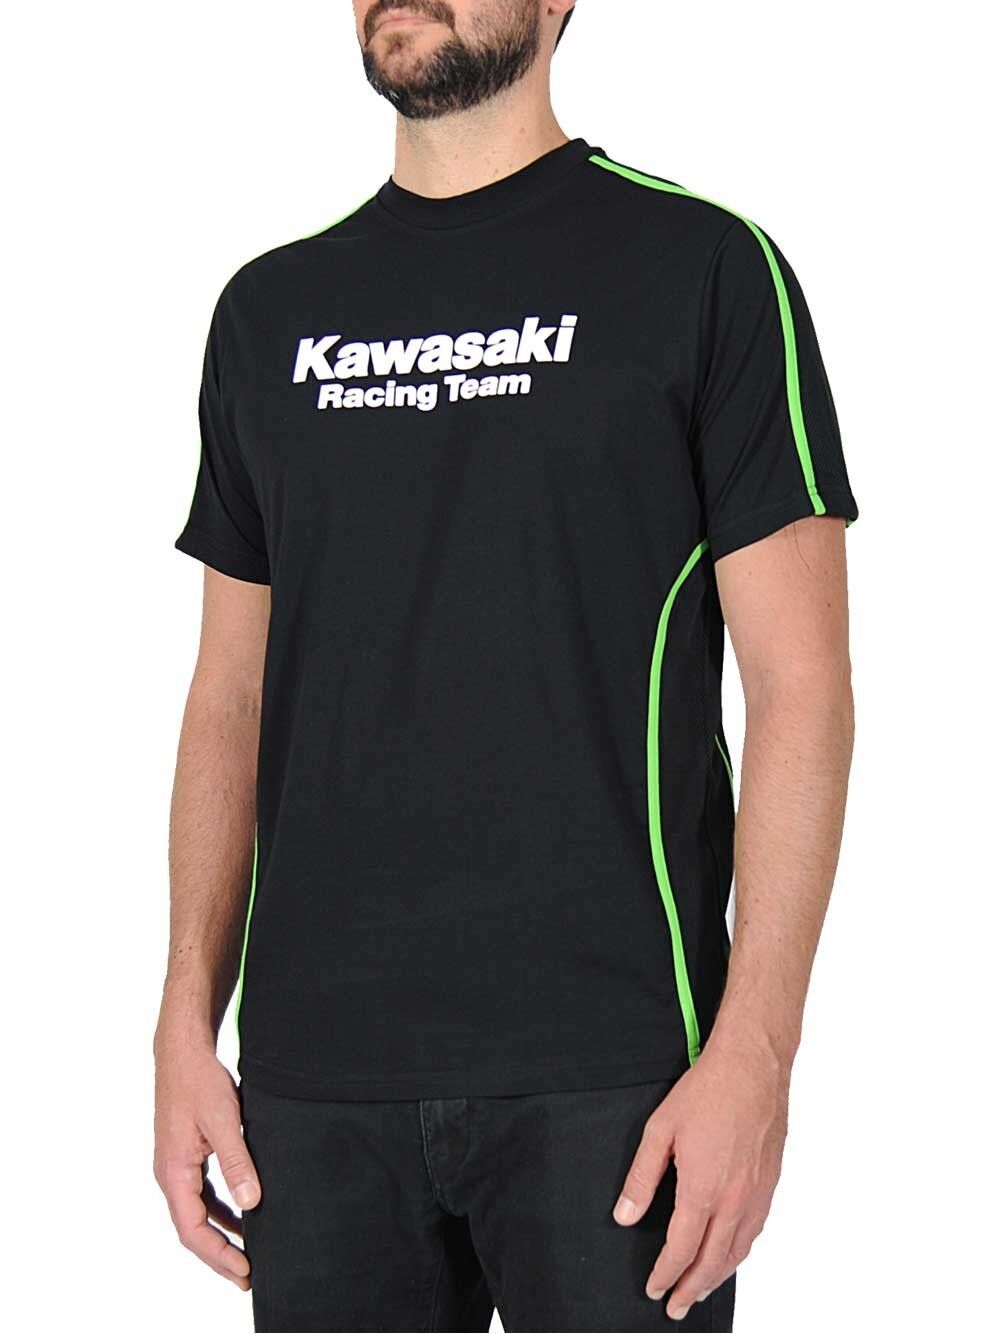 New Official Kawasaki Racing Team T'Shirt Single Stripe - 15 31520